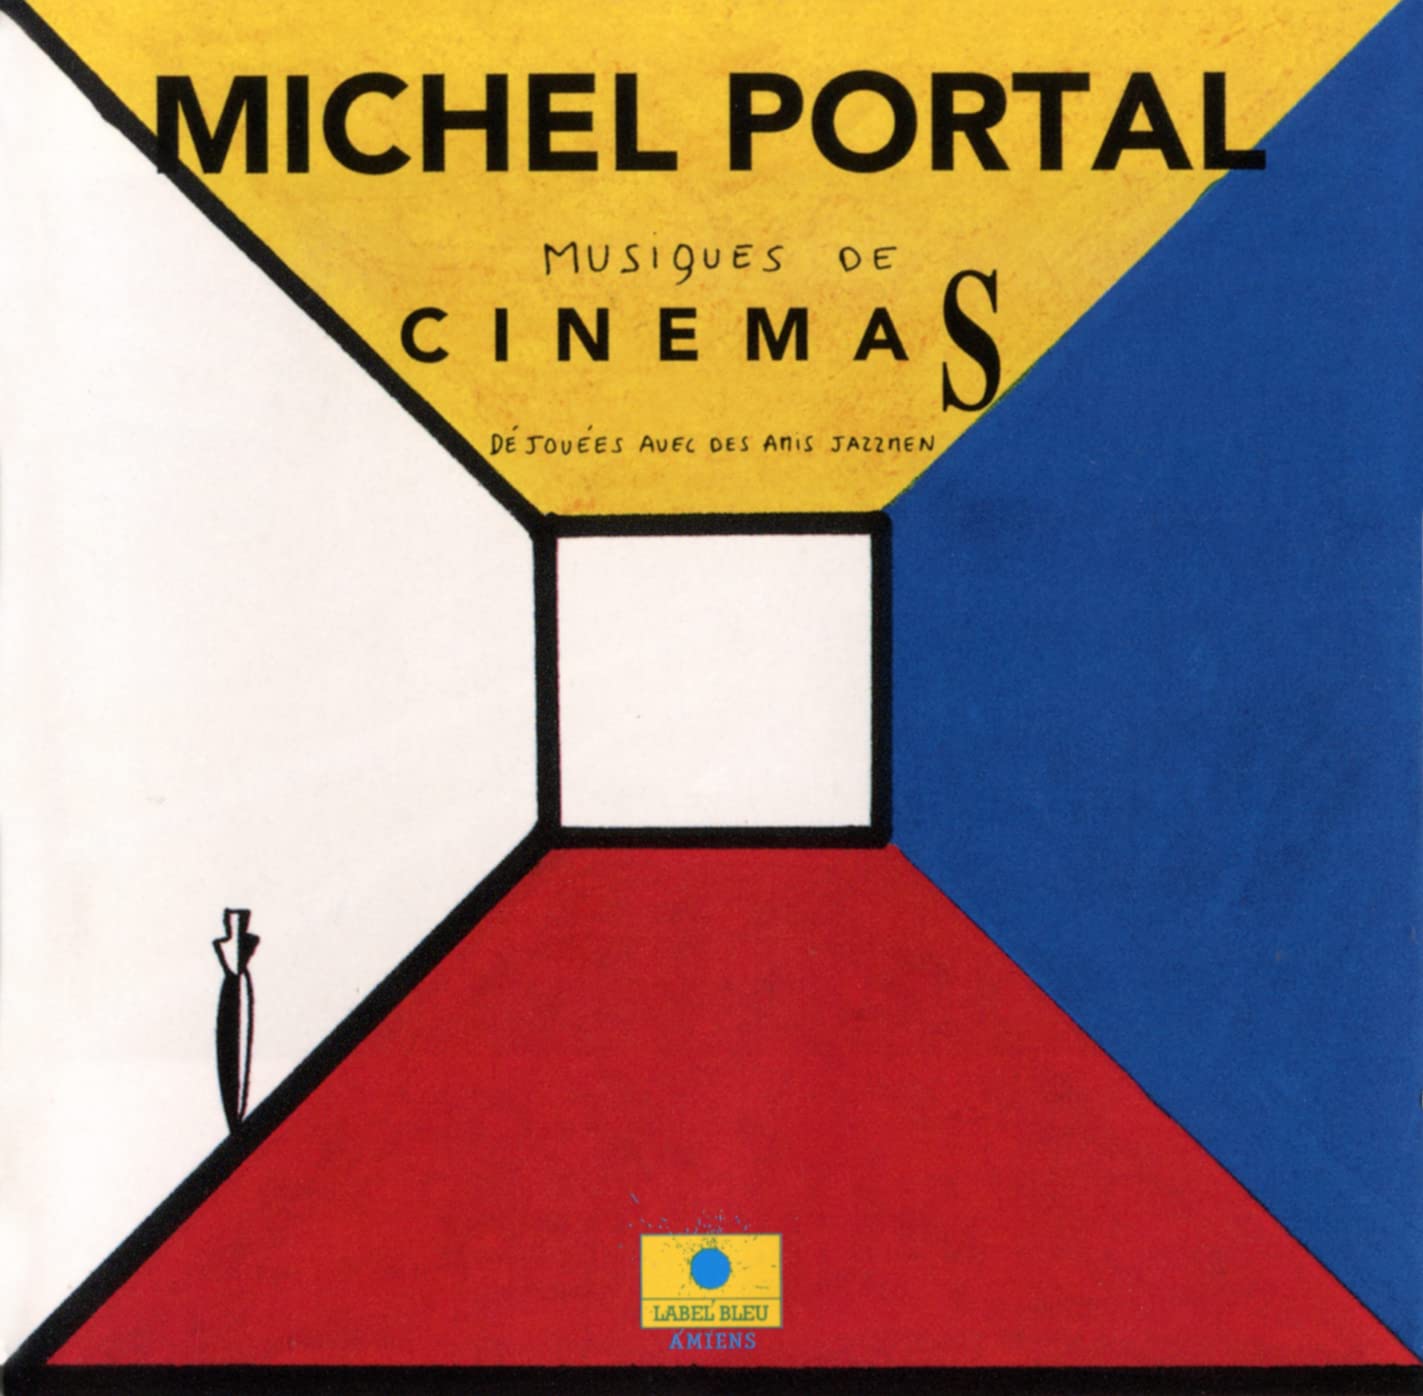 Michel Portal, Paul Meyer, The Royal Philharmonic Chamber Orchestra. - Musiques De Cinemas (Reissue) - Import CD